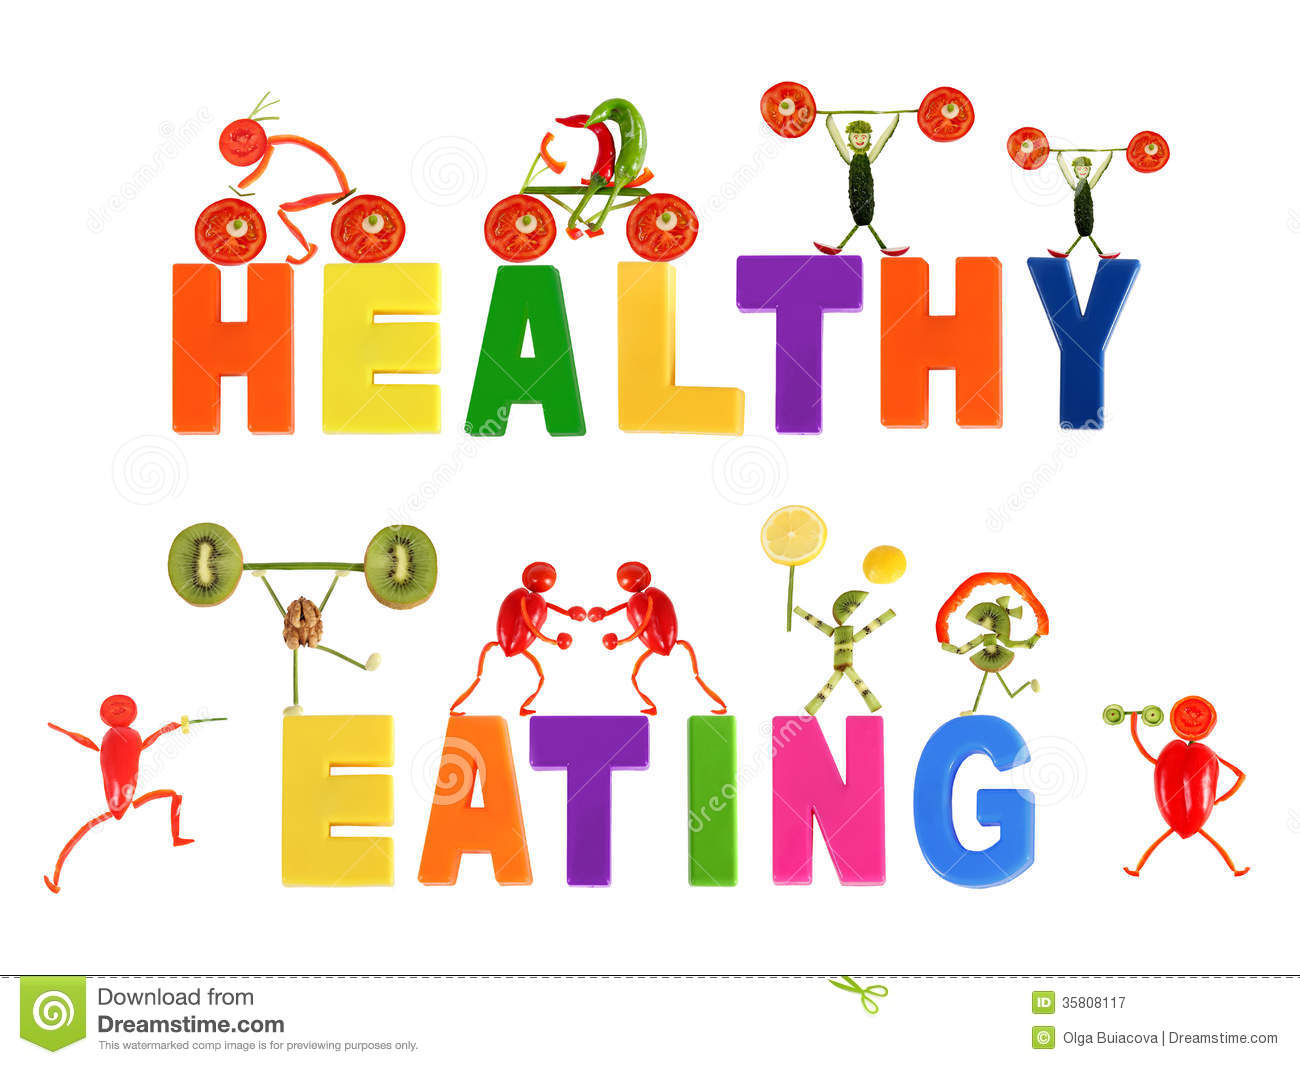 Eating Healthy Isn